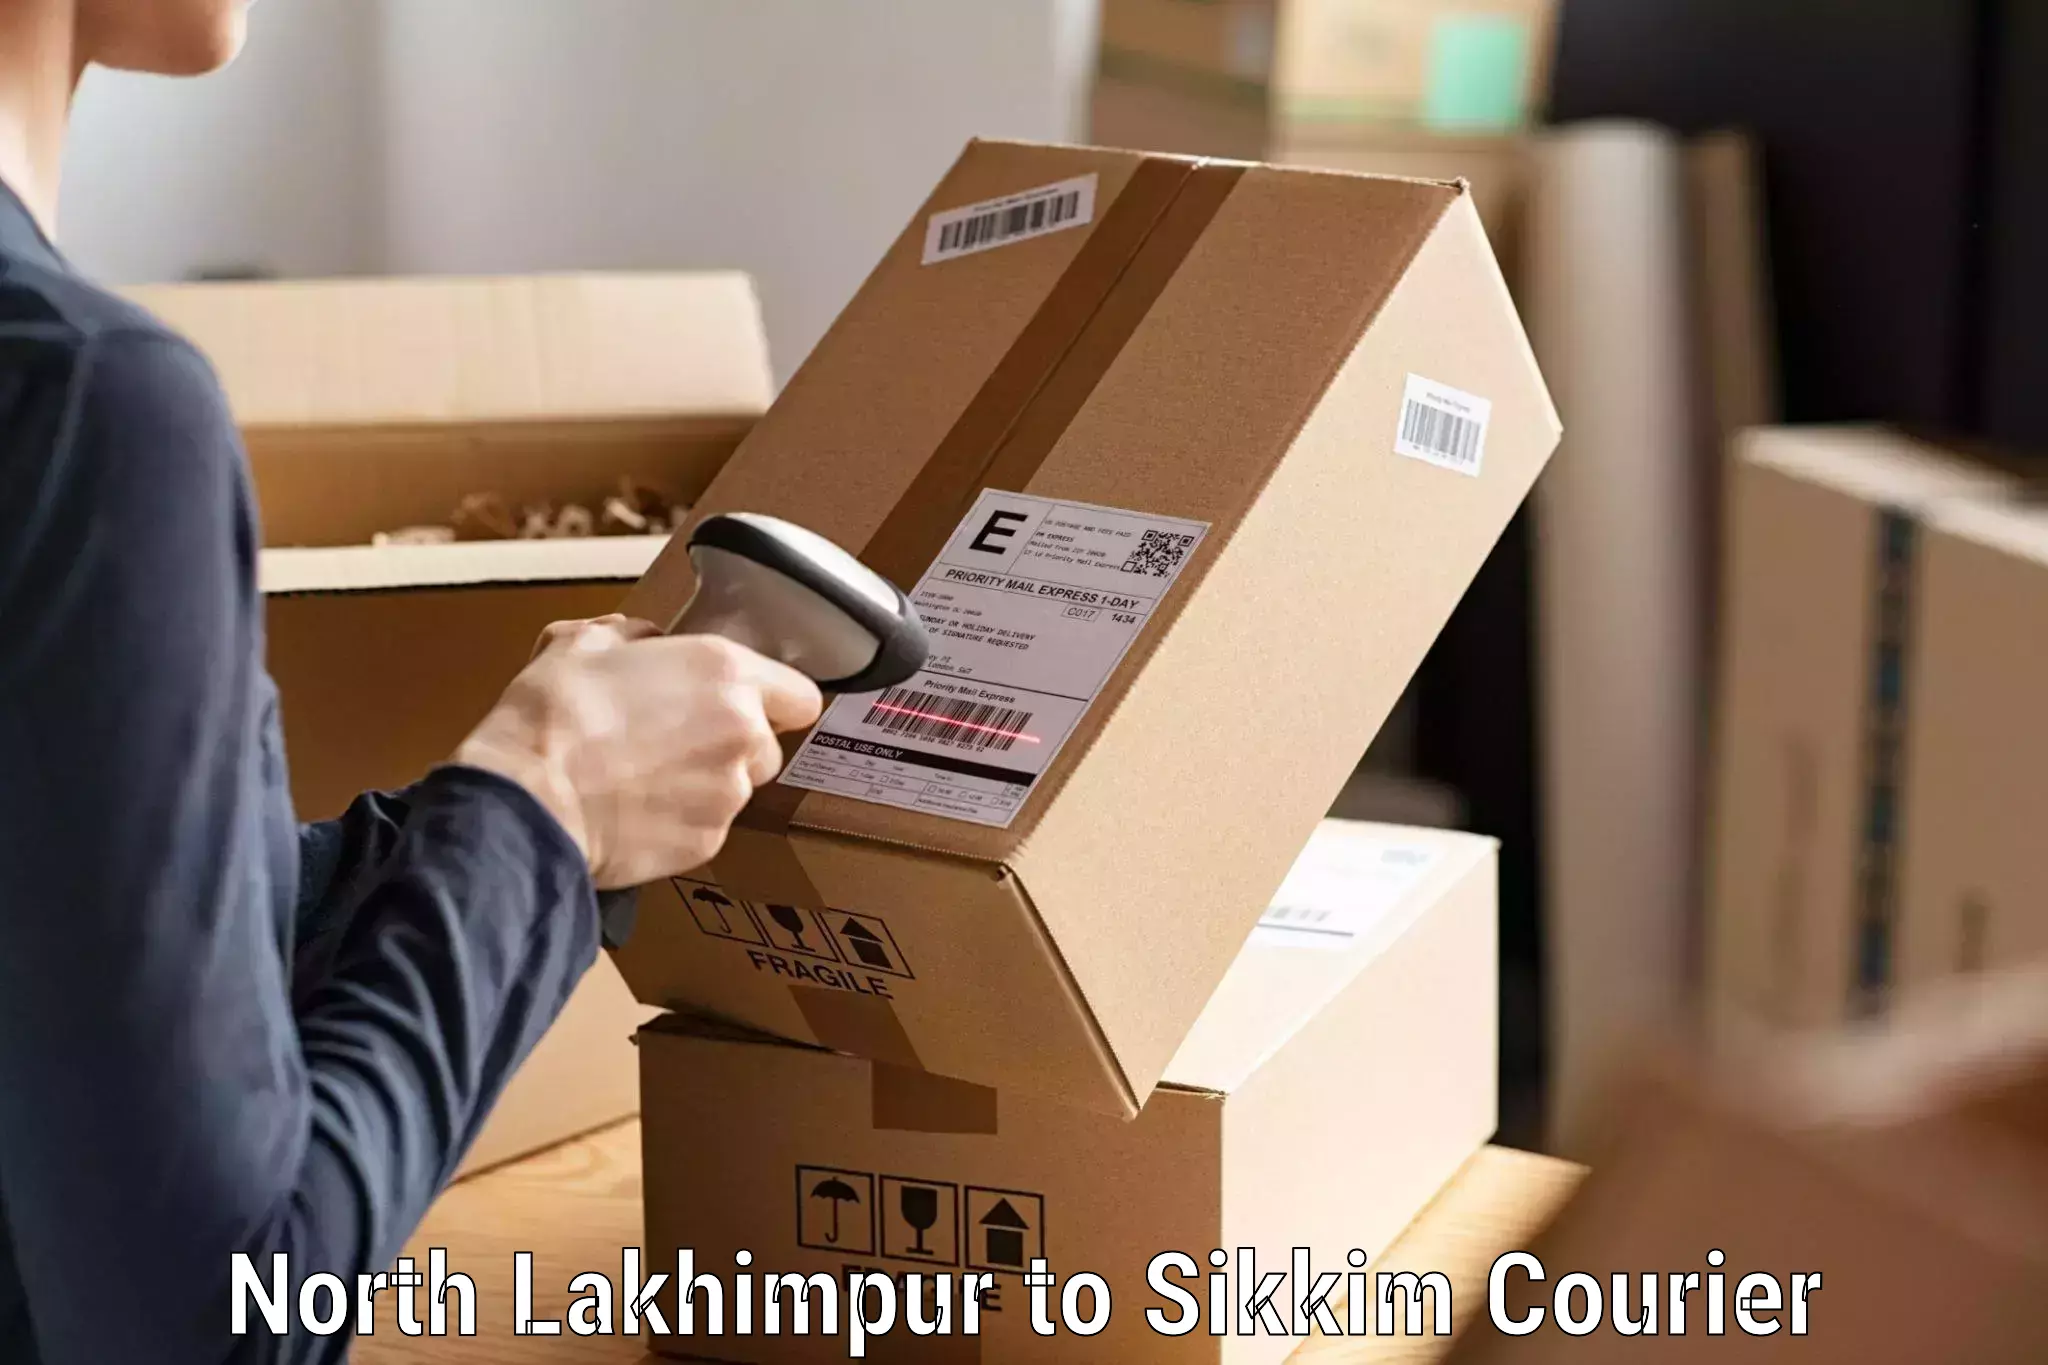 Courier service comparison North Lakhimpur to Namchi